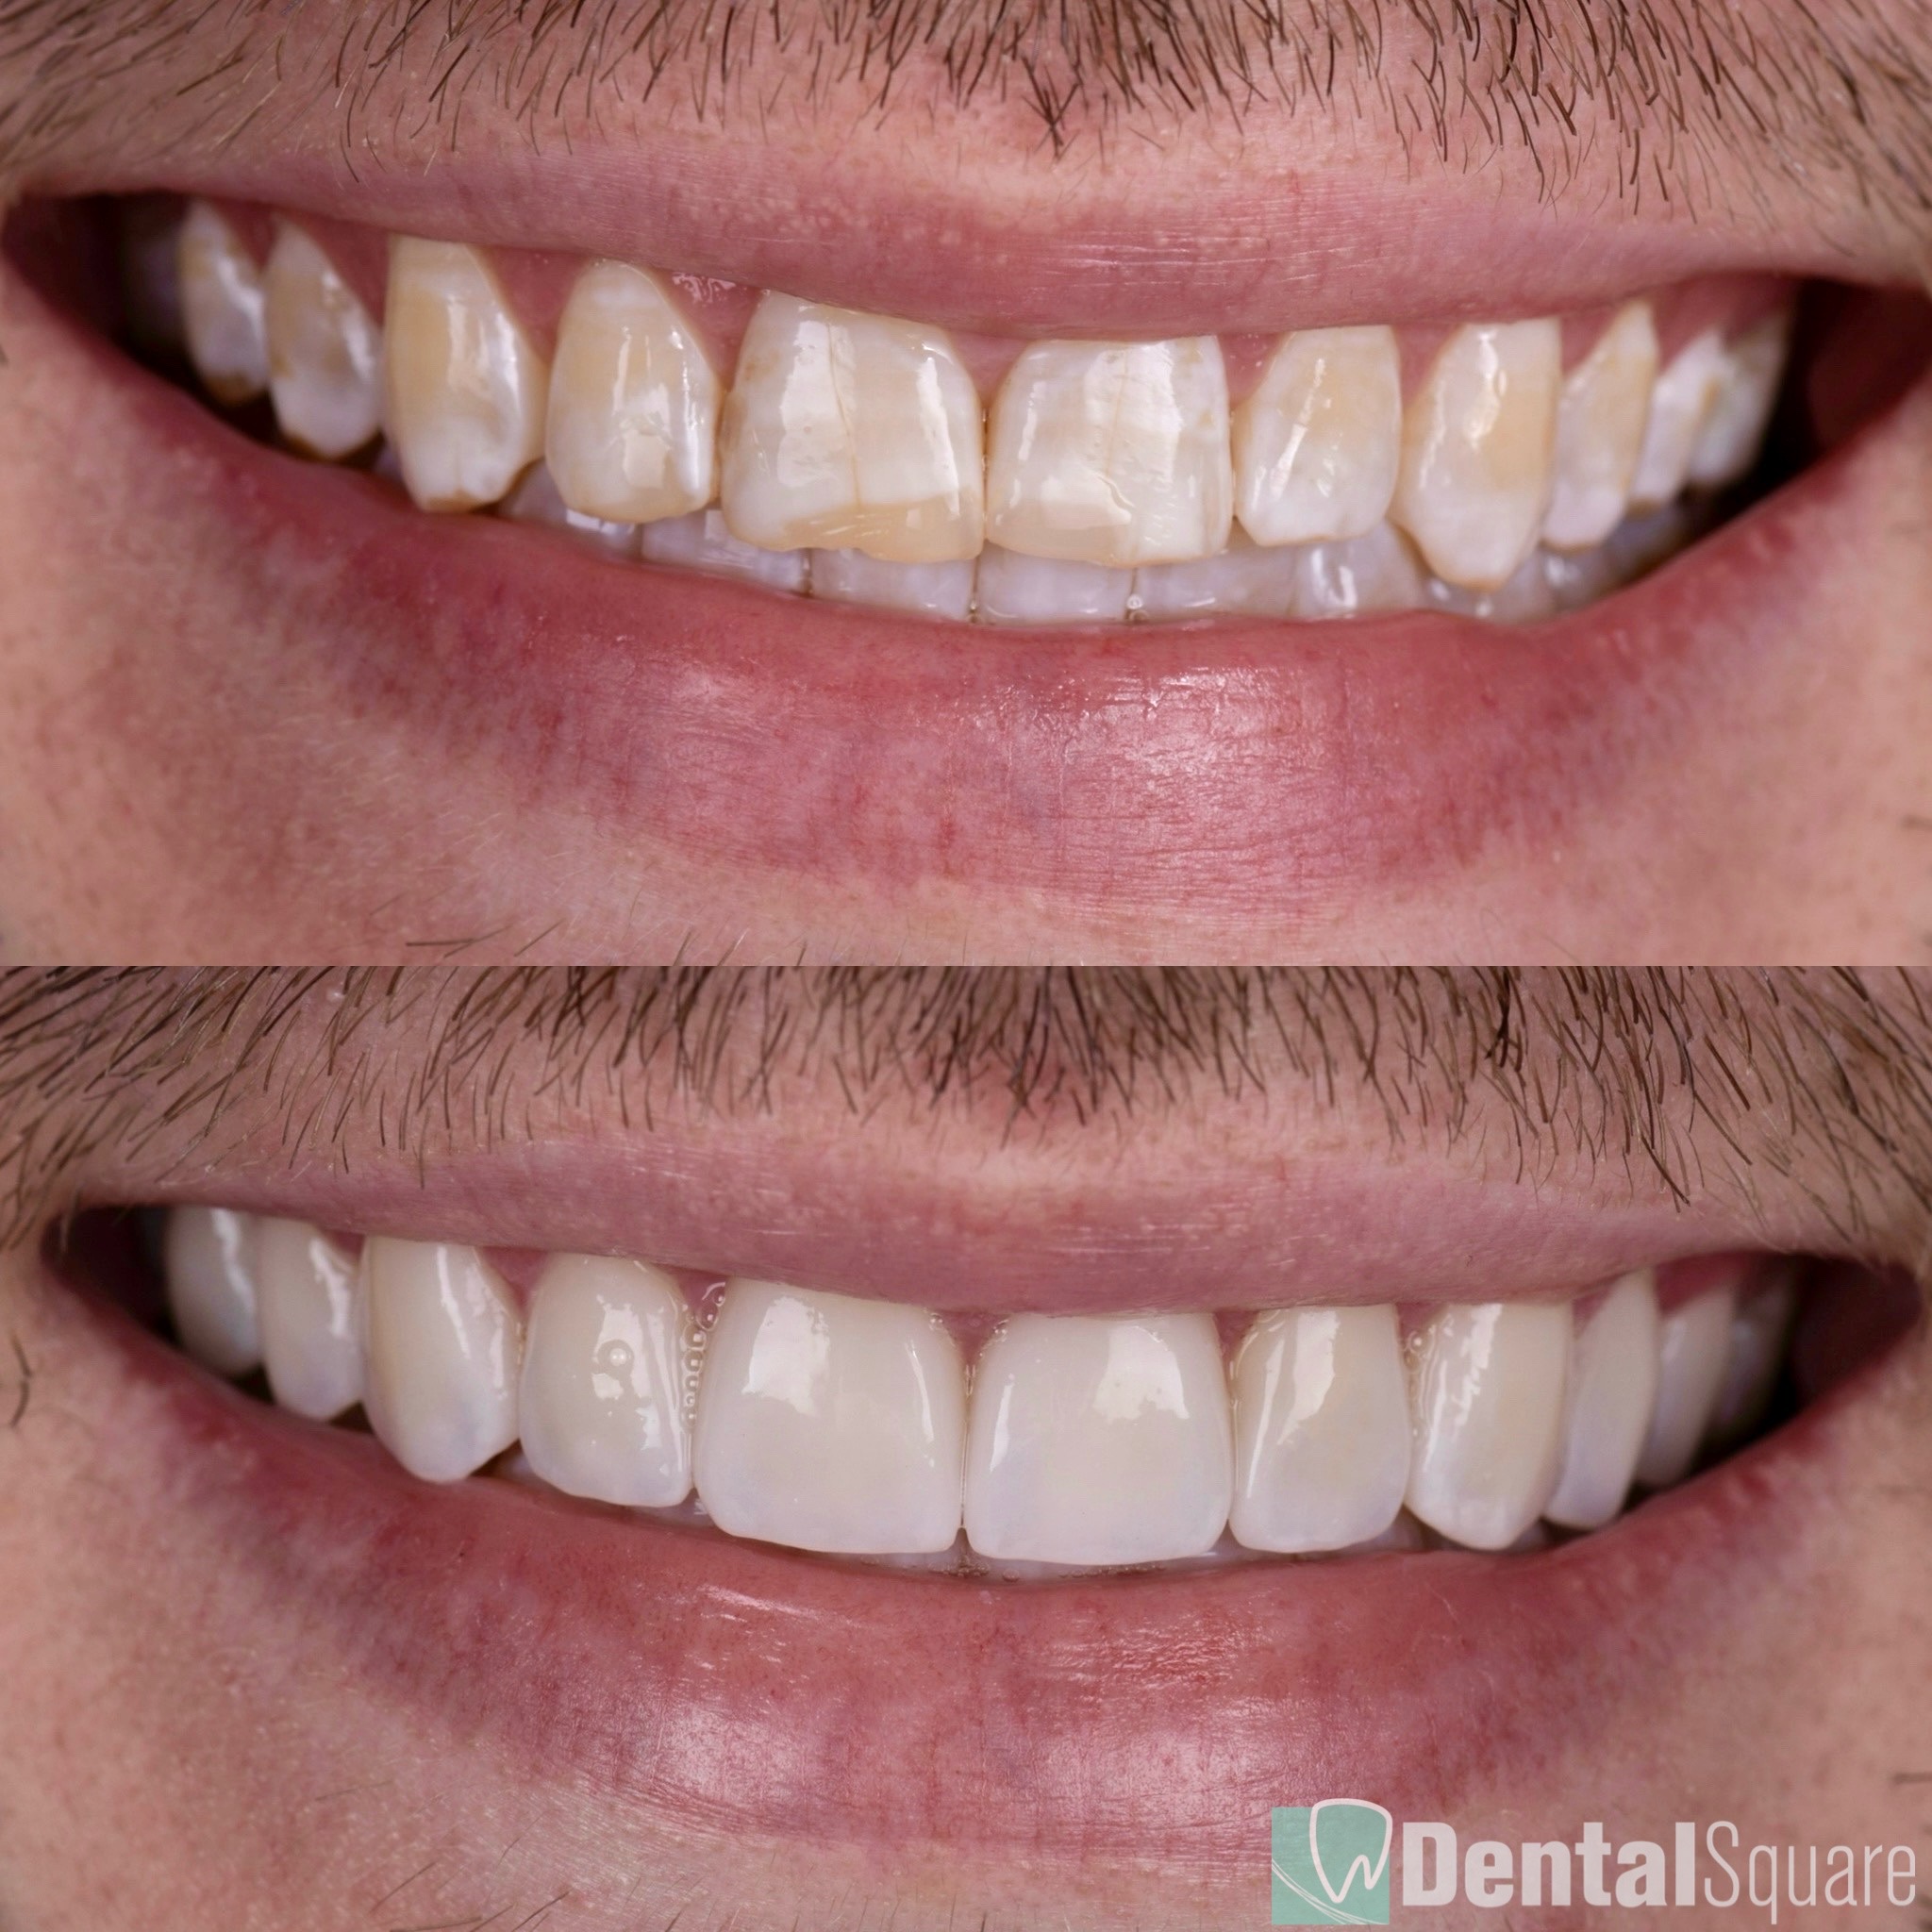 Stained Teeth treated with Porcelain Veneers